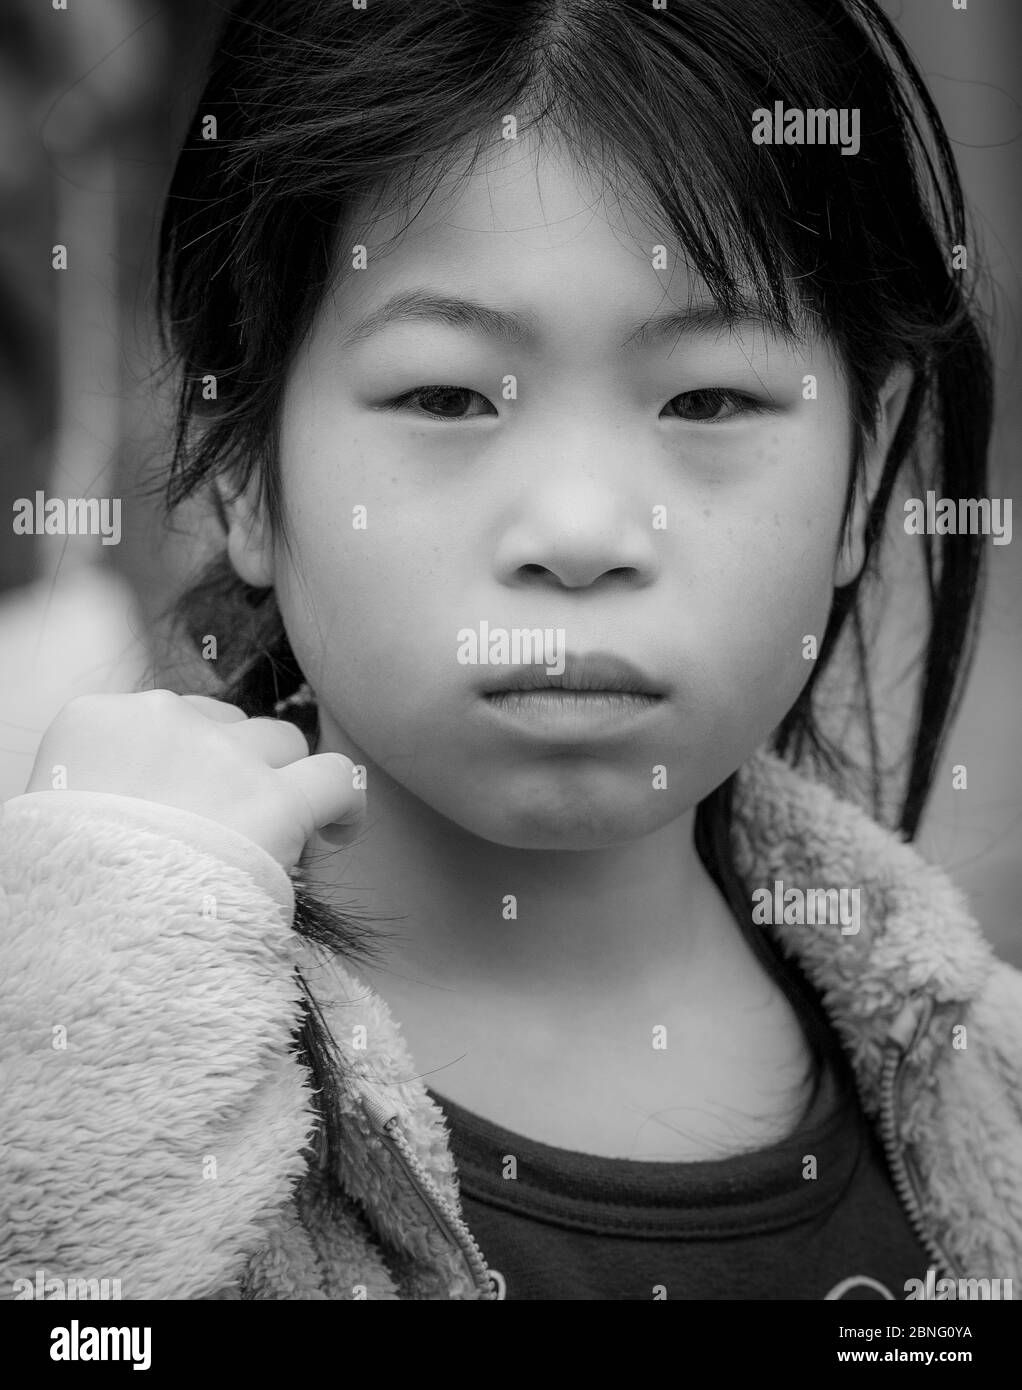 A portrait of a young Japanese girl shopping in Takeshita street, Harajuku, Tokyo, Japan. Stock Photo